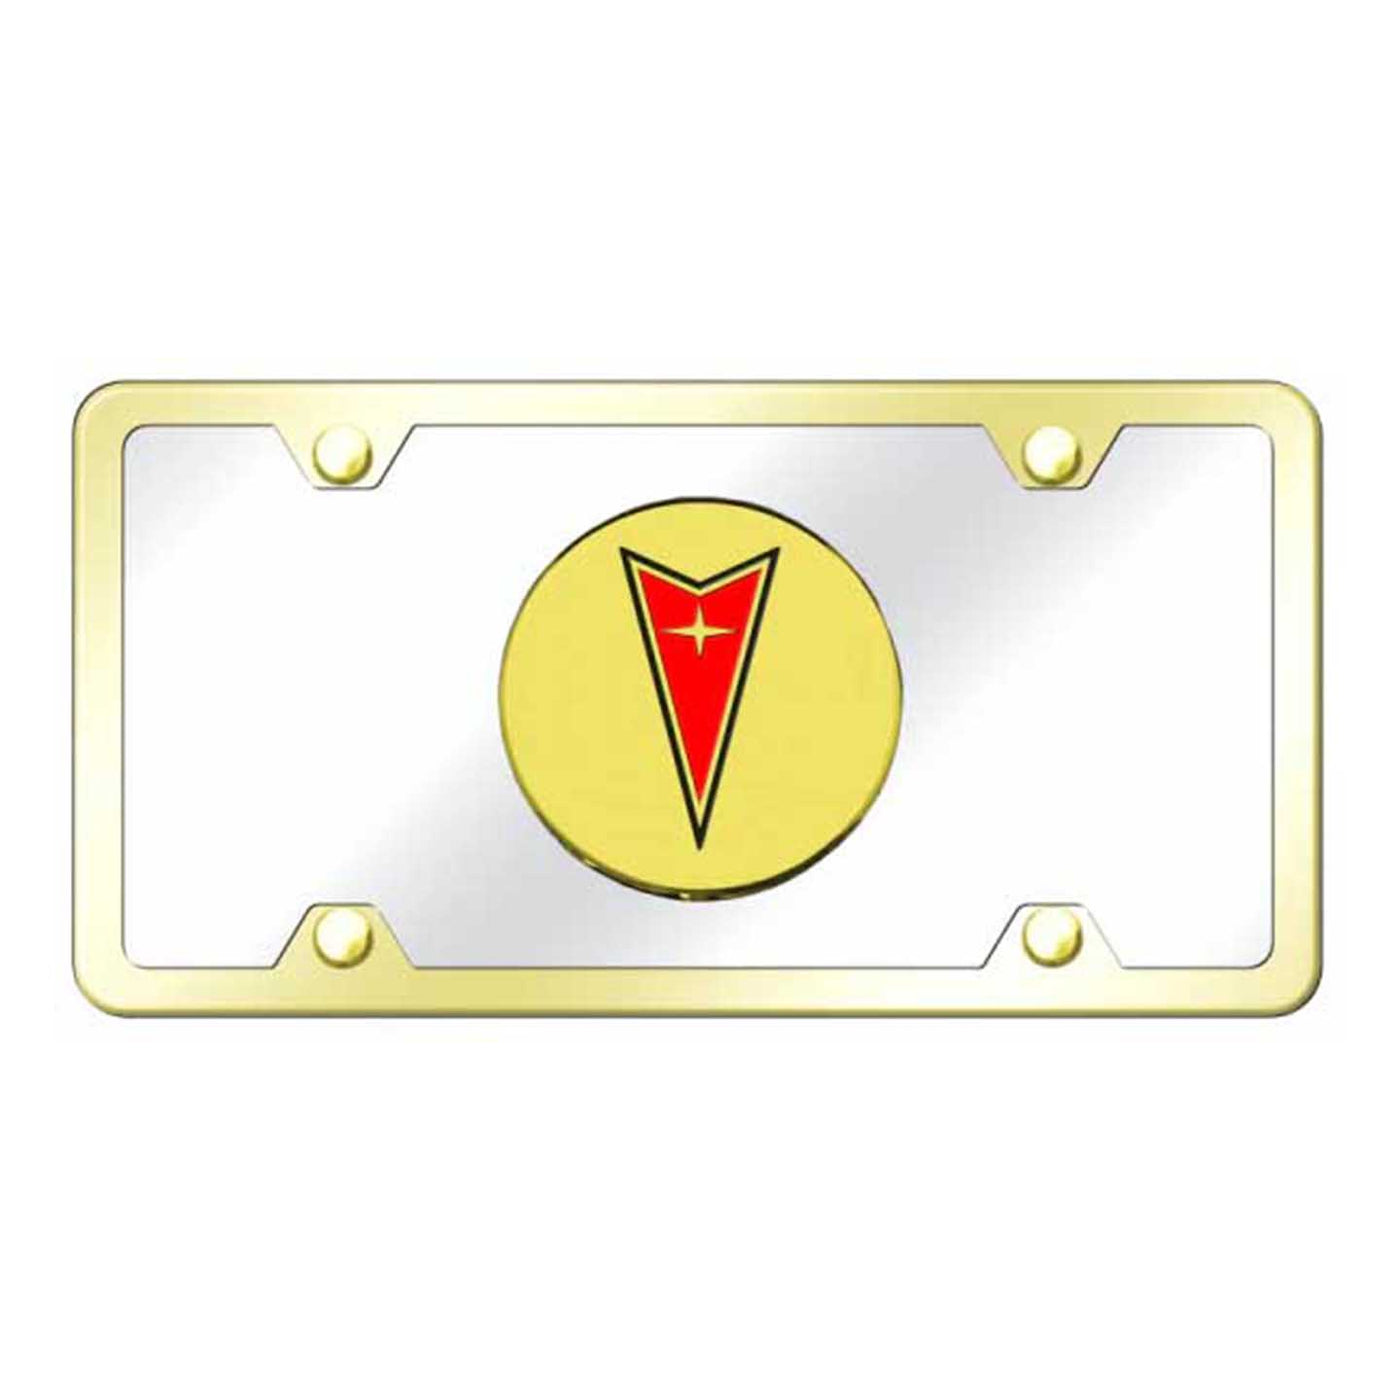 Pontiac Plate Kit - Gold on Mirrored